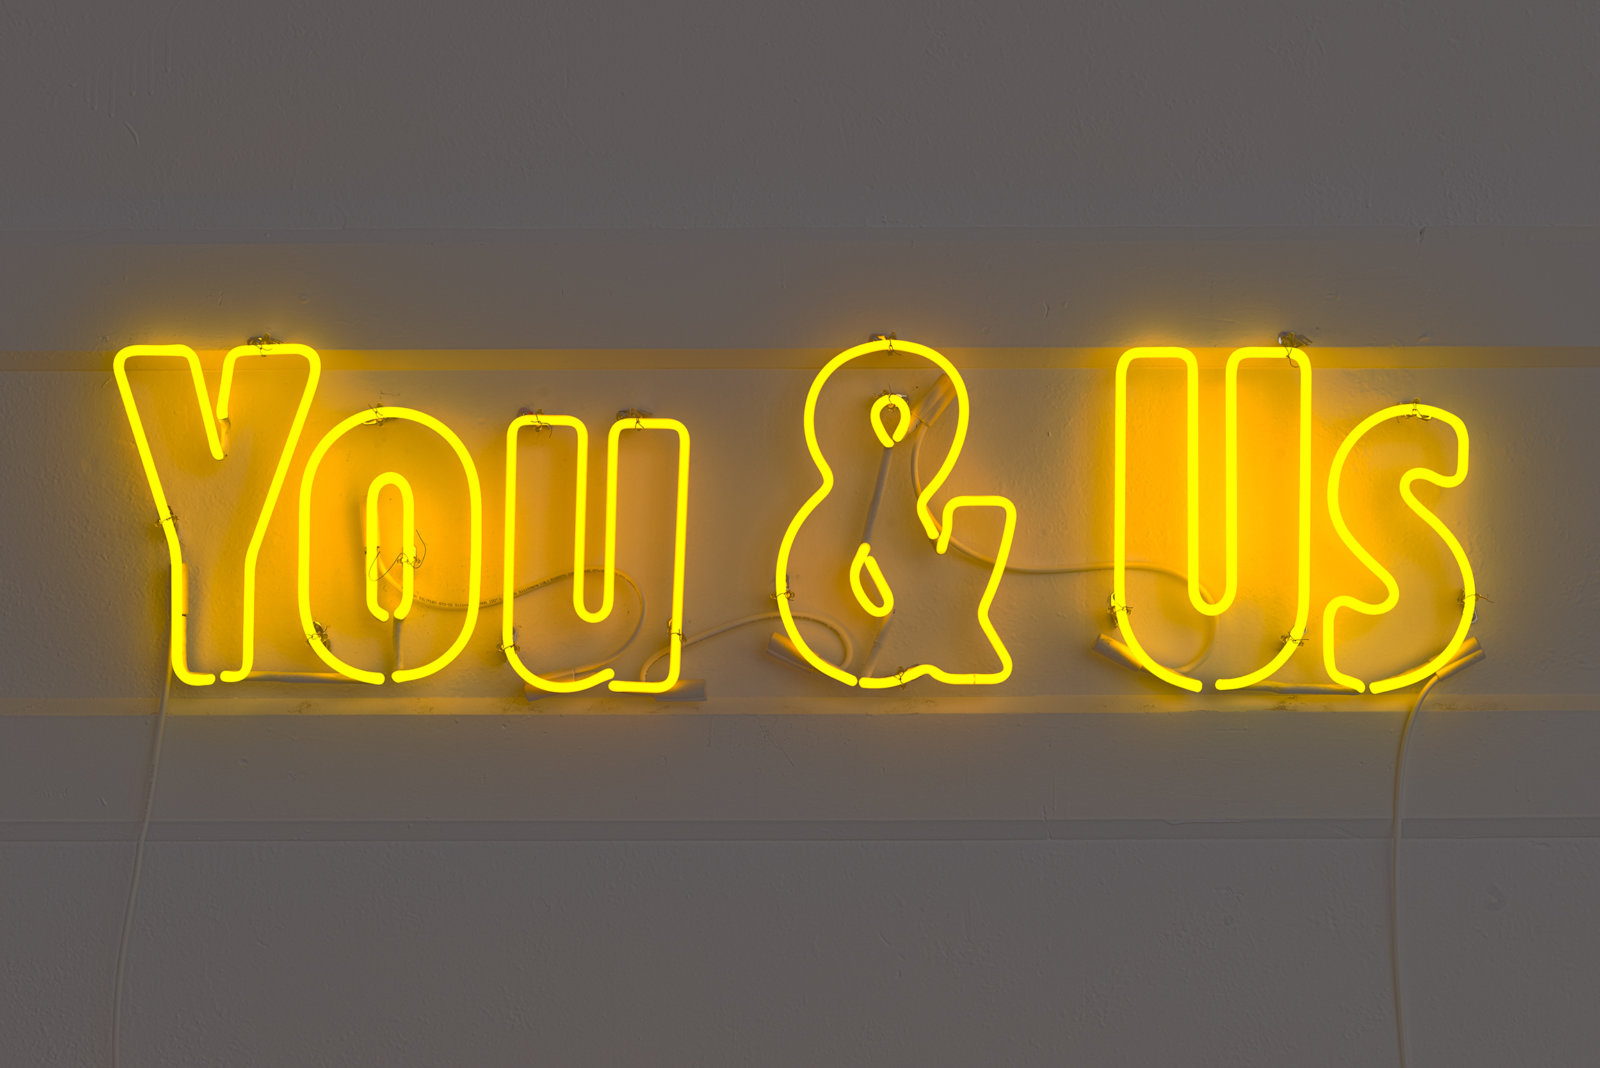 Ron Terada, You &amp; Us, 2006, neon, 13 x 52 in. (33 x 132 cm)